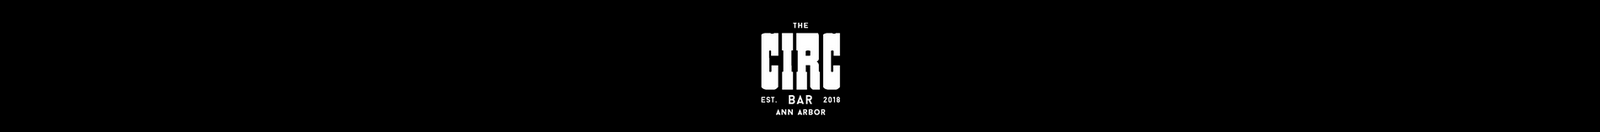 The Circ Bar